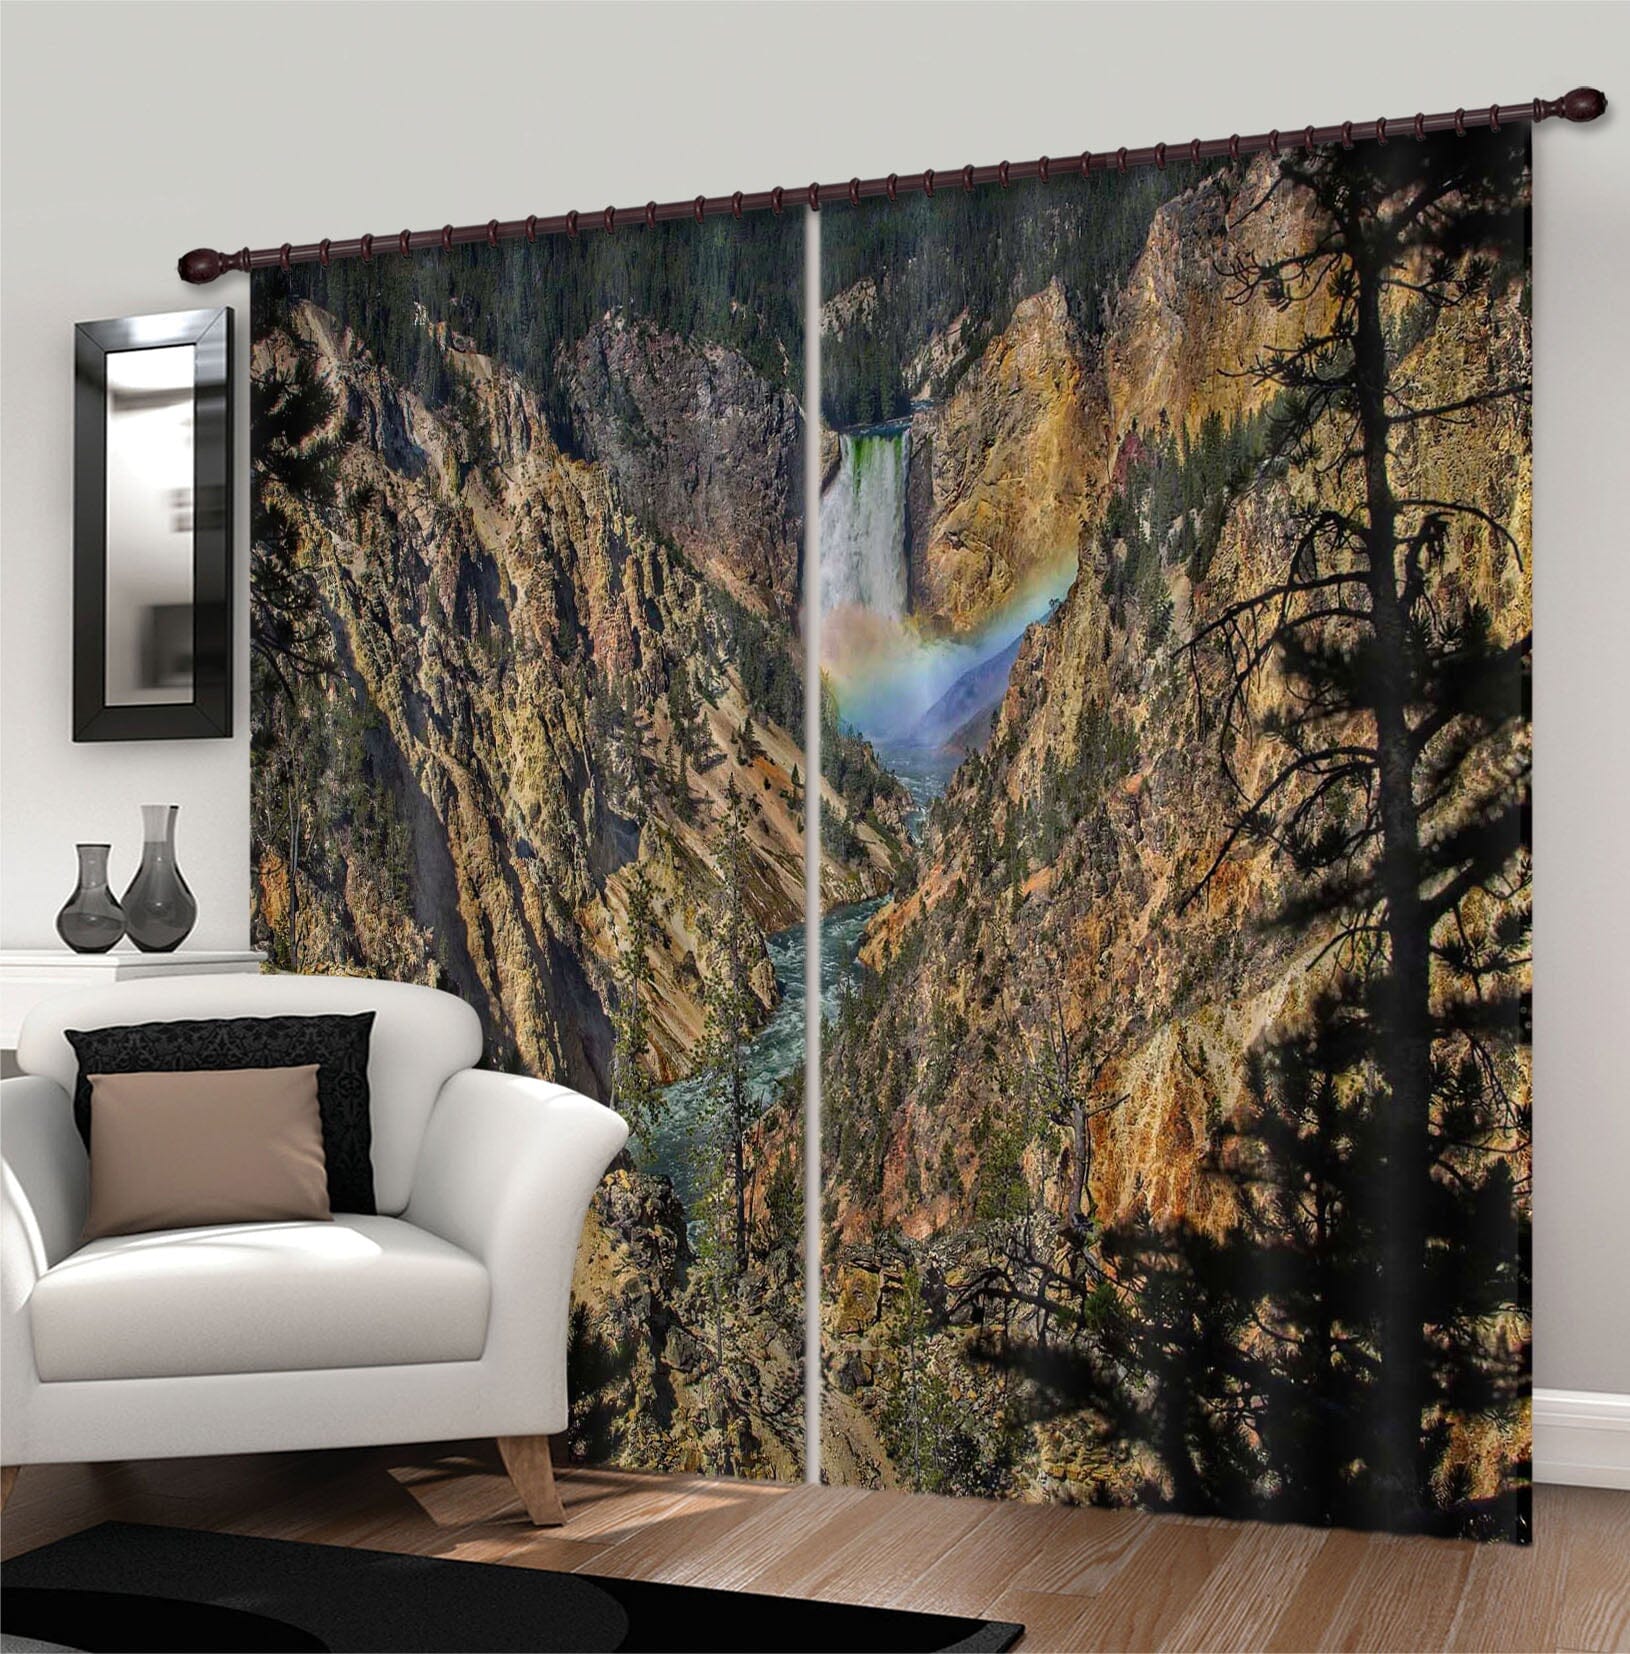 3D Grand Canyon 052 Kathy Barefield Curtain Curtains Drapes Curtains AJ Creativity Home 